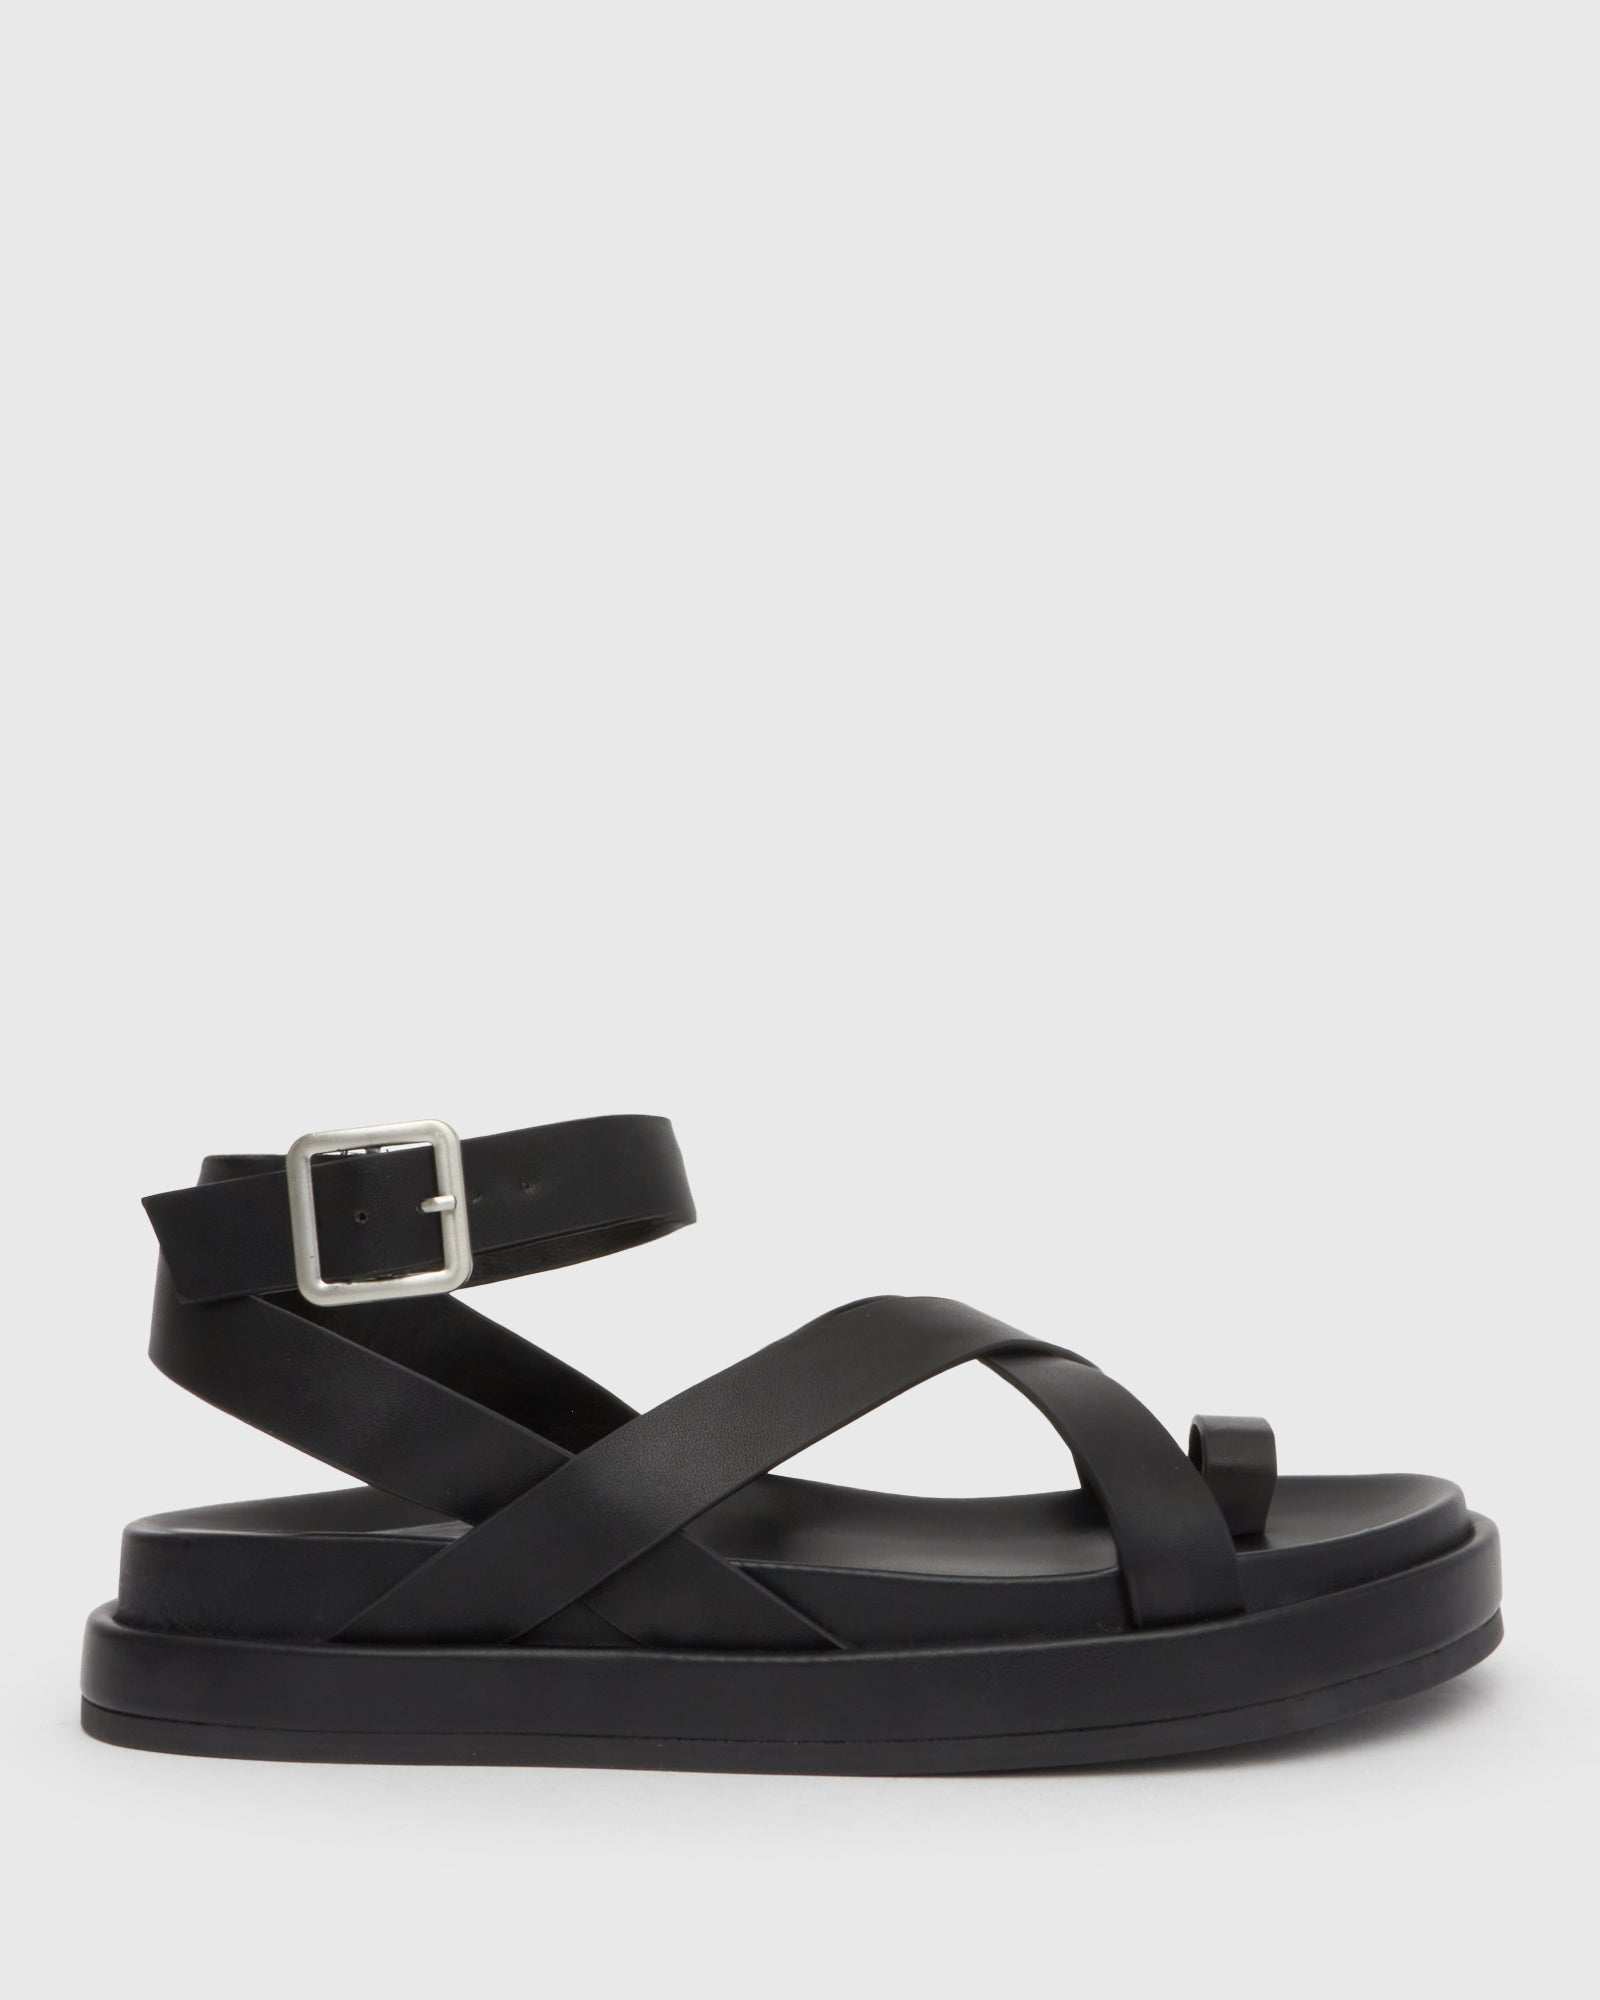 Adrienne Vittadini Soft Footbed Sandals | Mercari